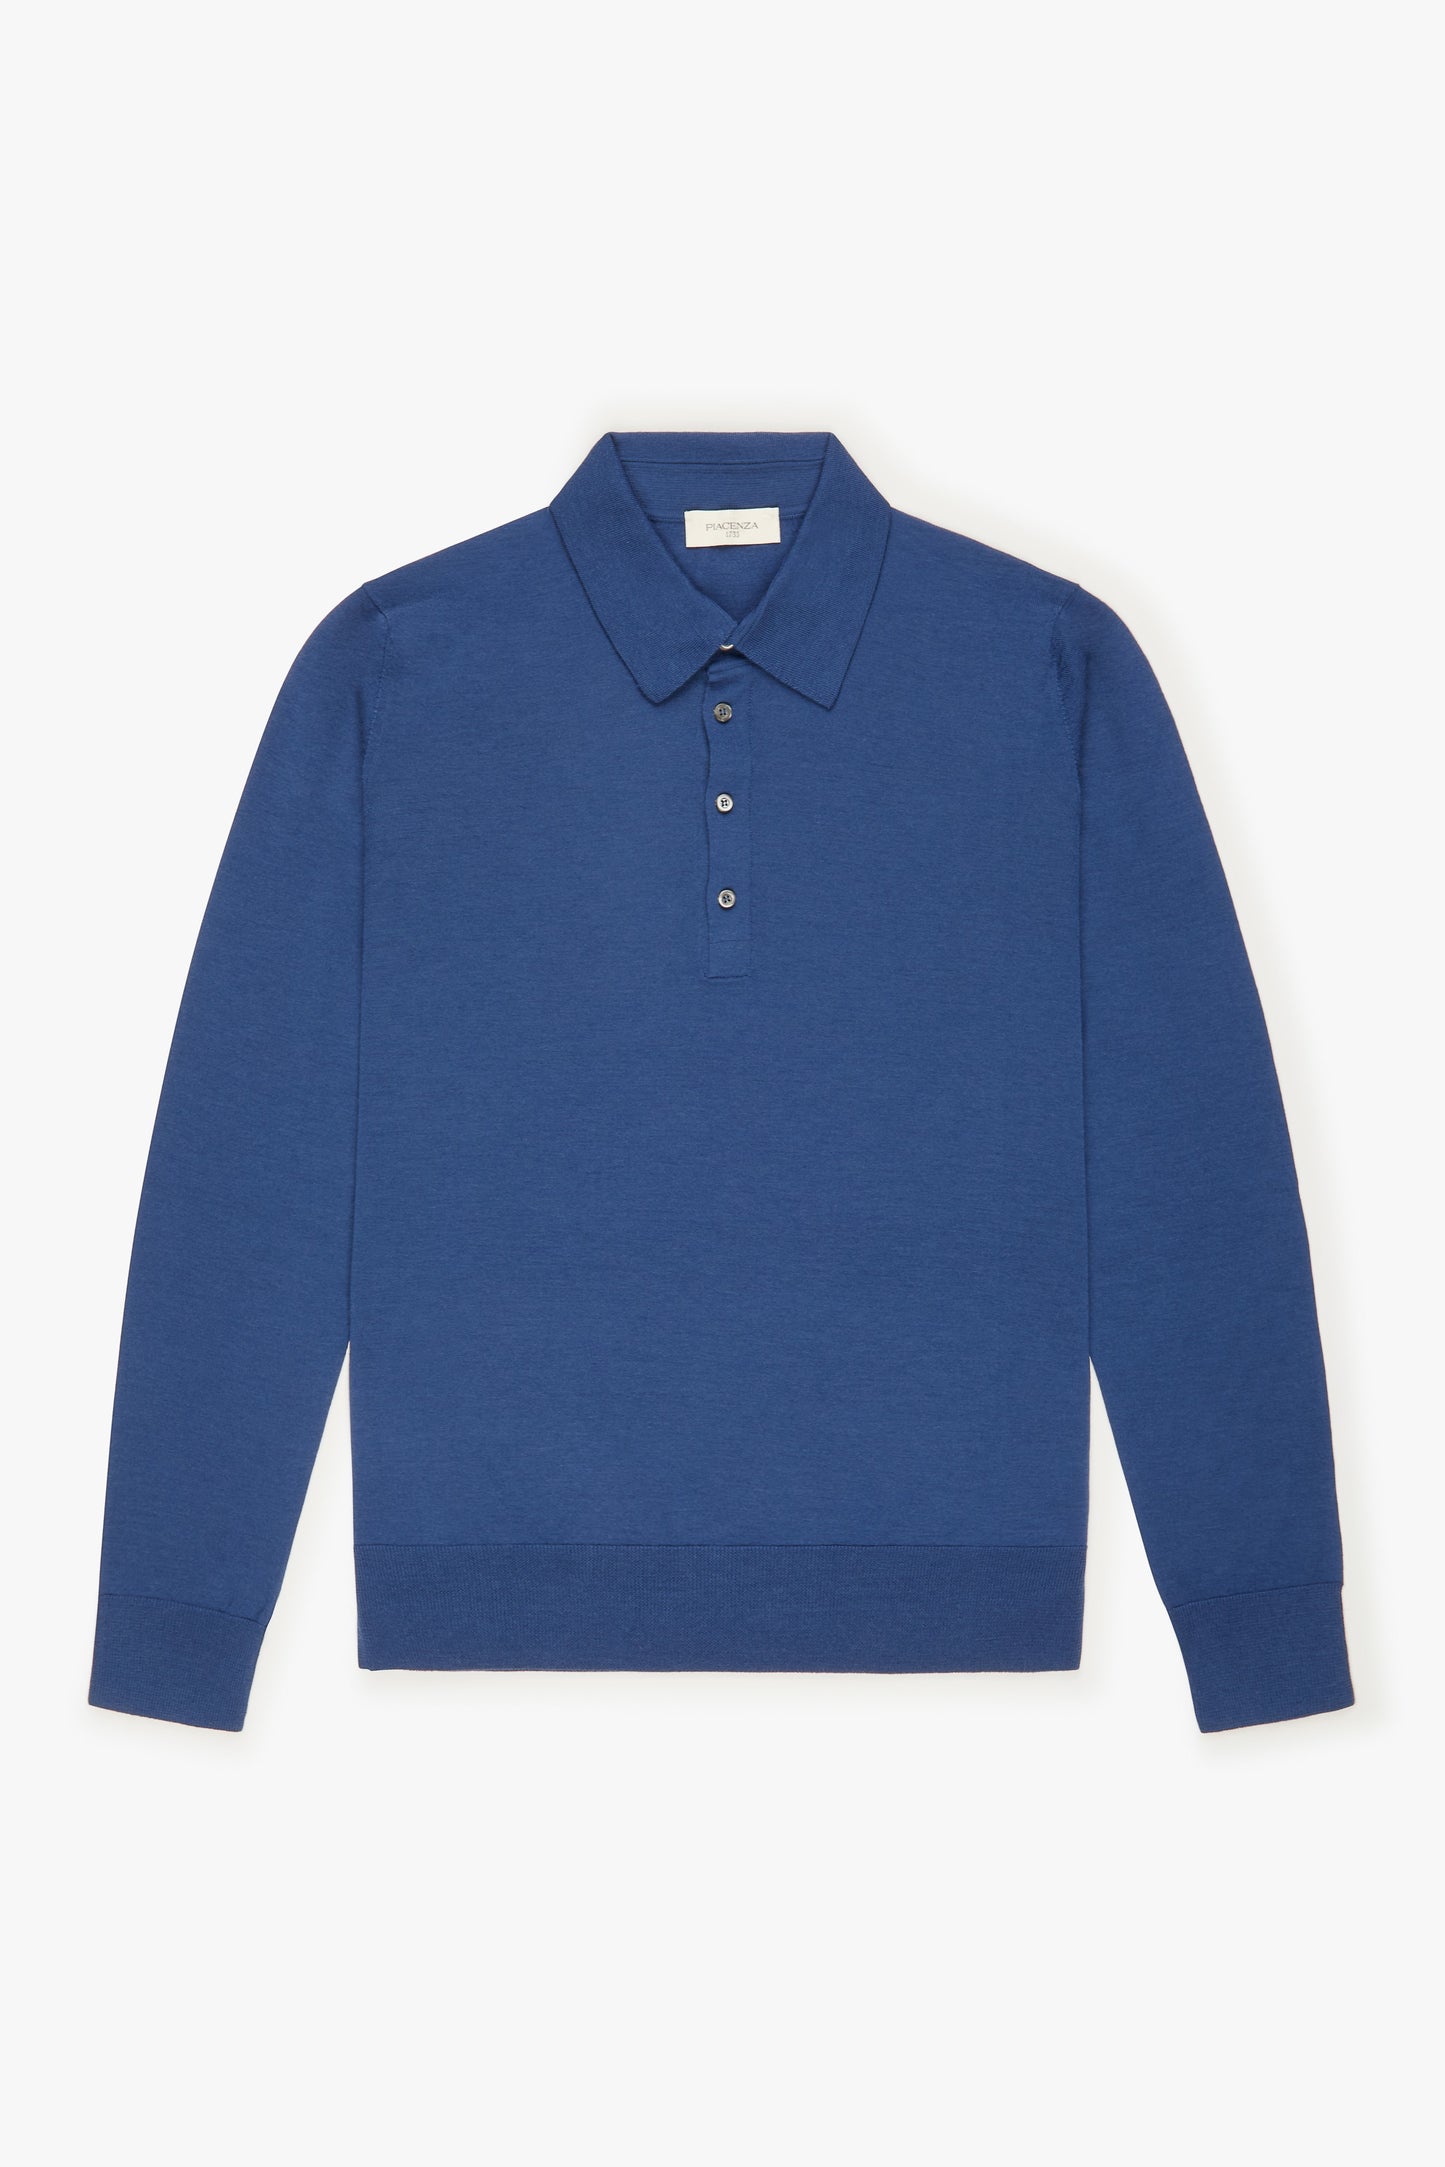 Super fine blue merino wool polo shirt